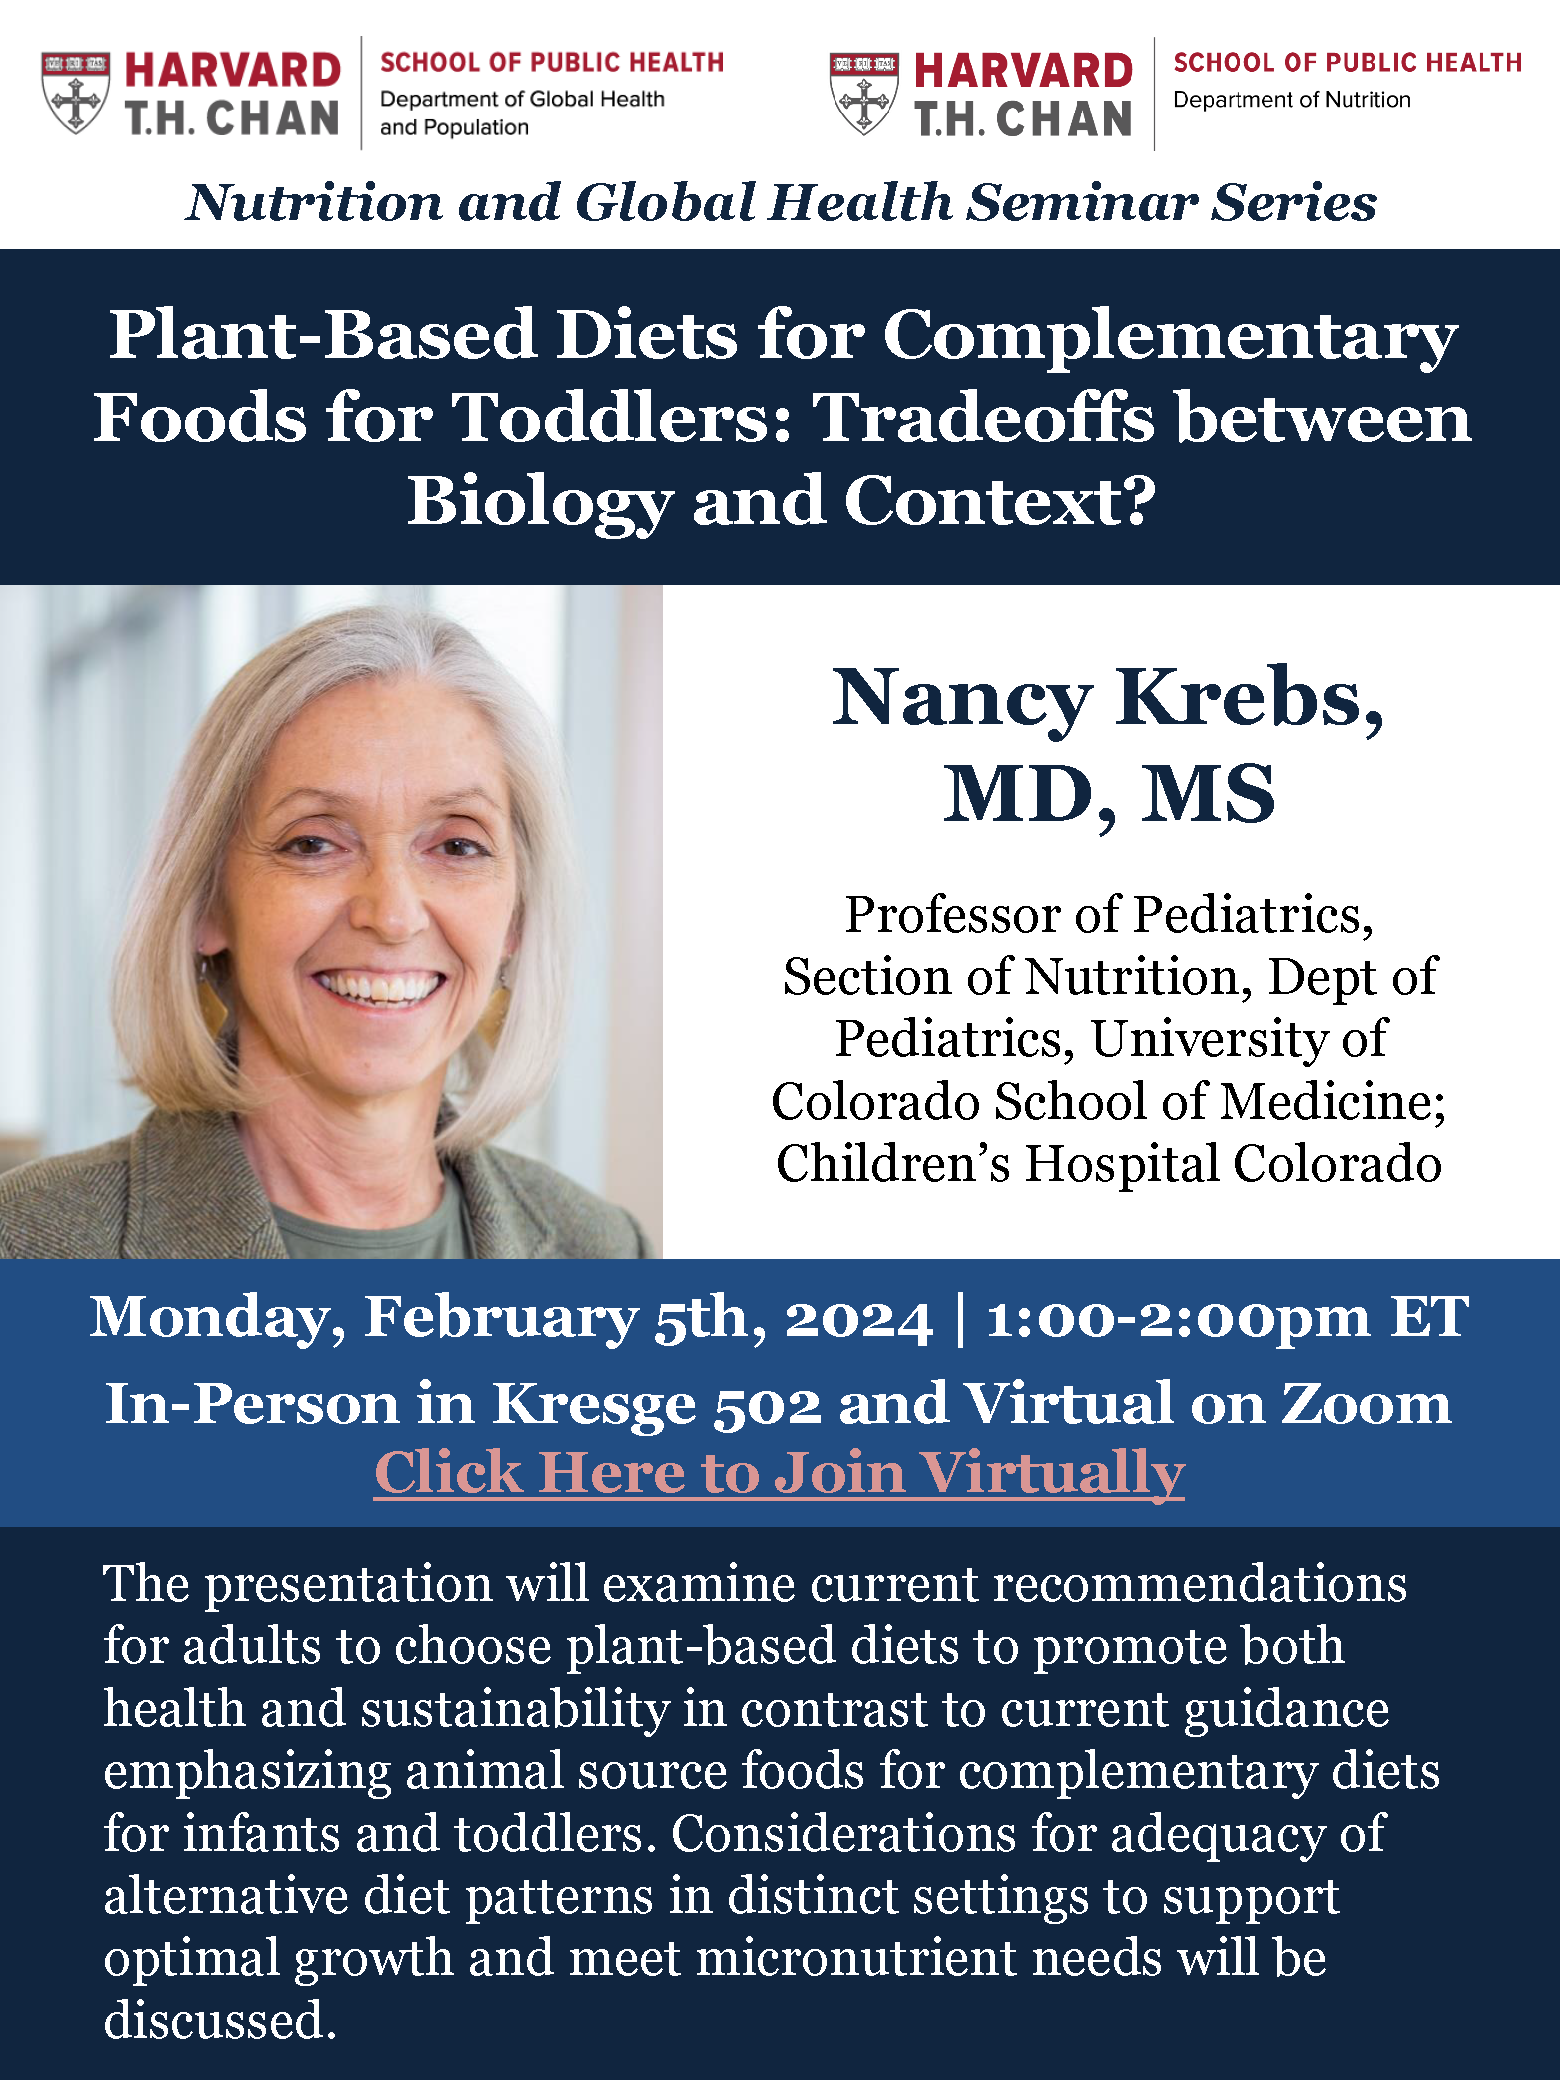 Nancy Krebs Monday Seminar Flyer; In-person in Kresge 502 or Virtual On Zoom